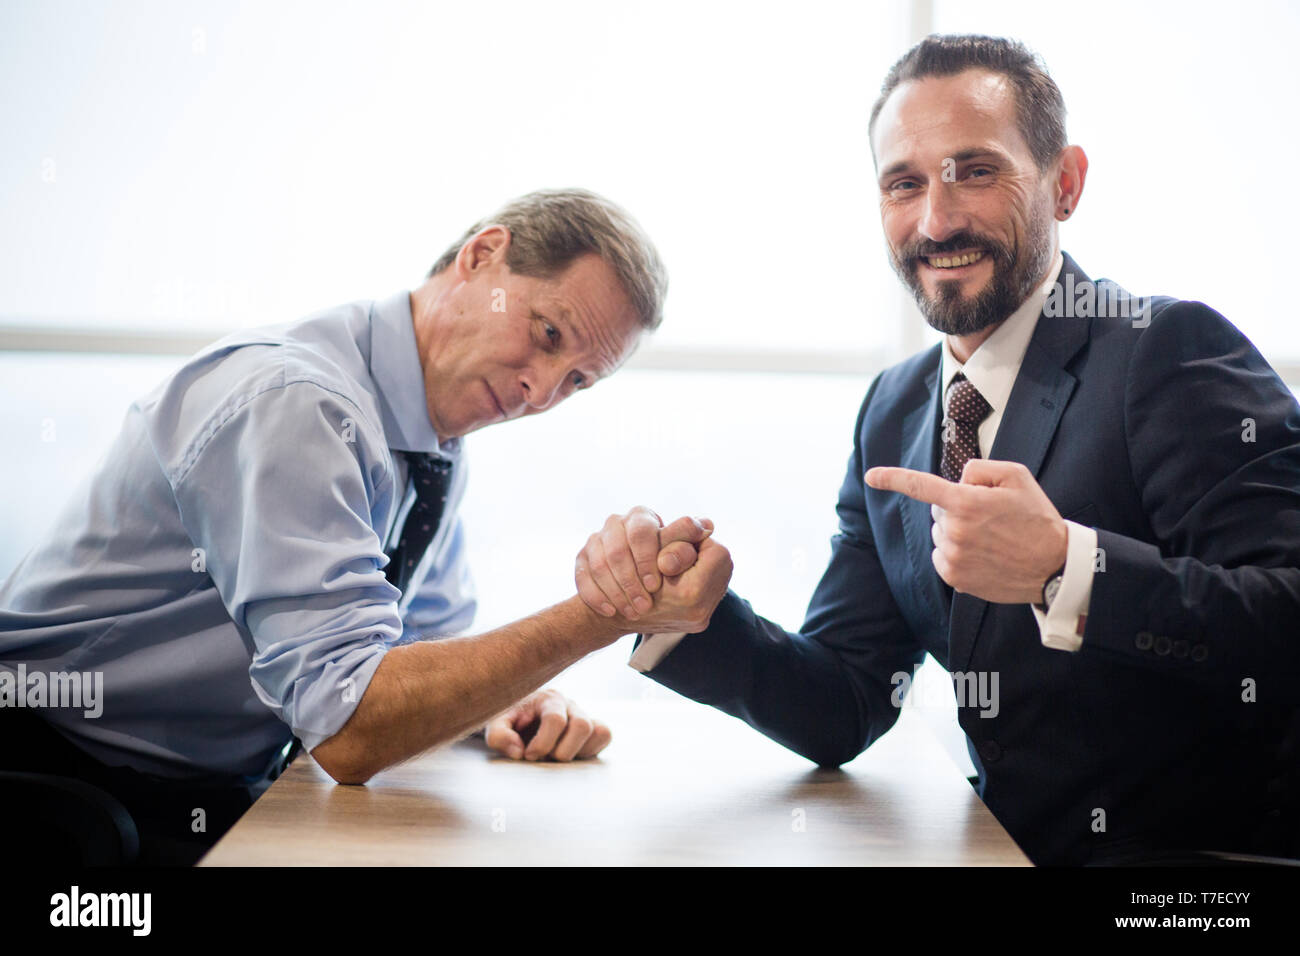 Two businessmen doing arm wrestling in office Stock Photo